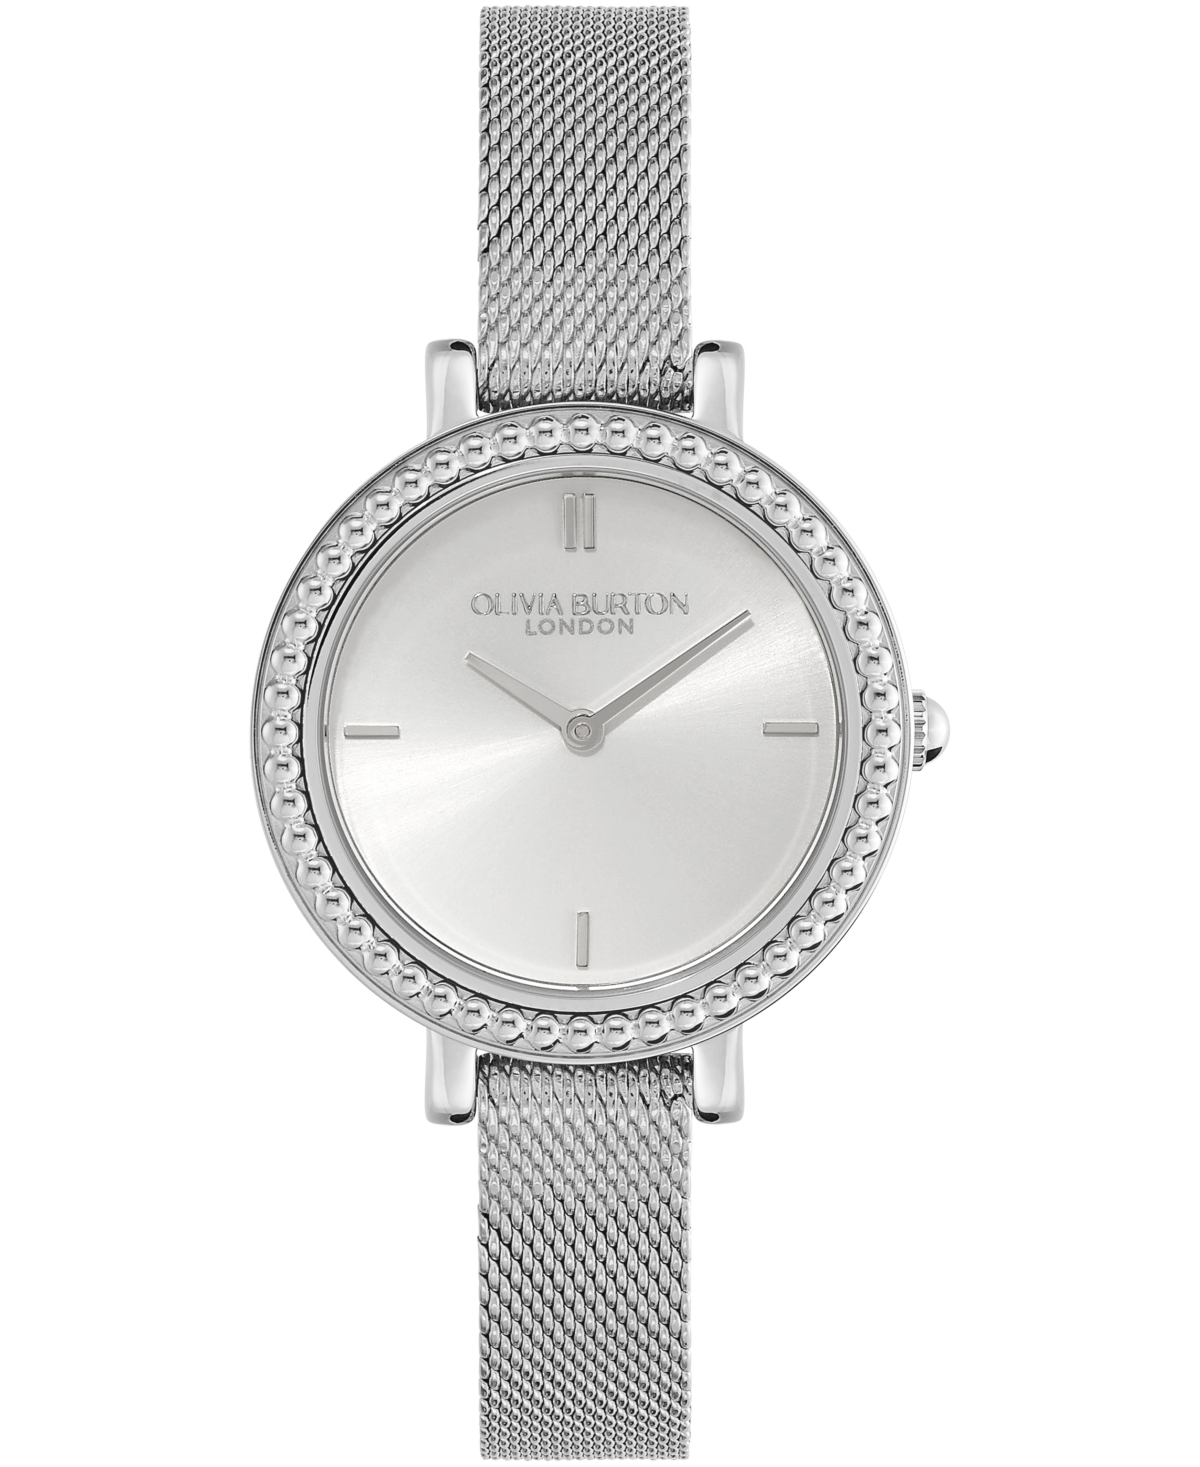 Women's Vintage-Like Bead Silver-Tone Stainless Steel Mesh Watch 30mm - Silver